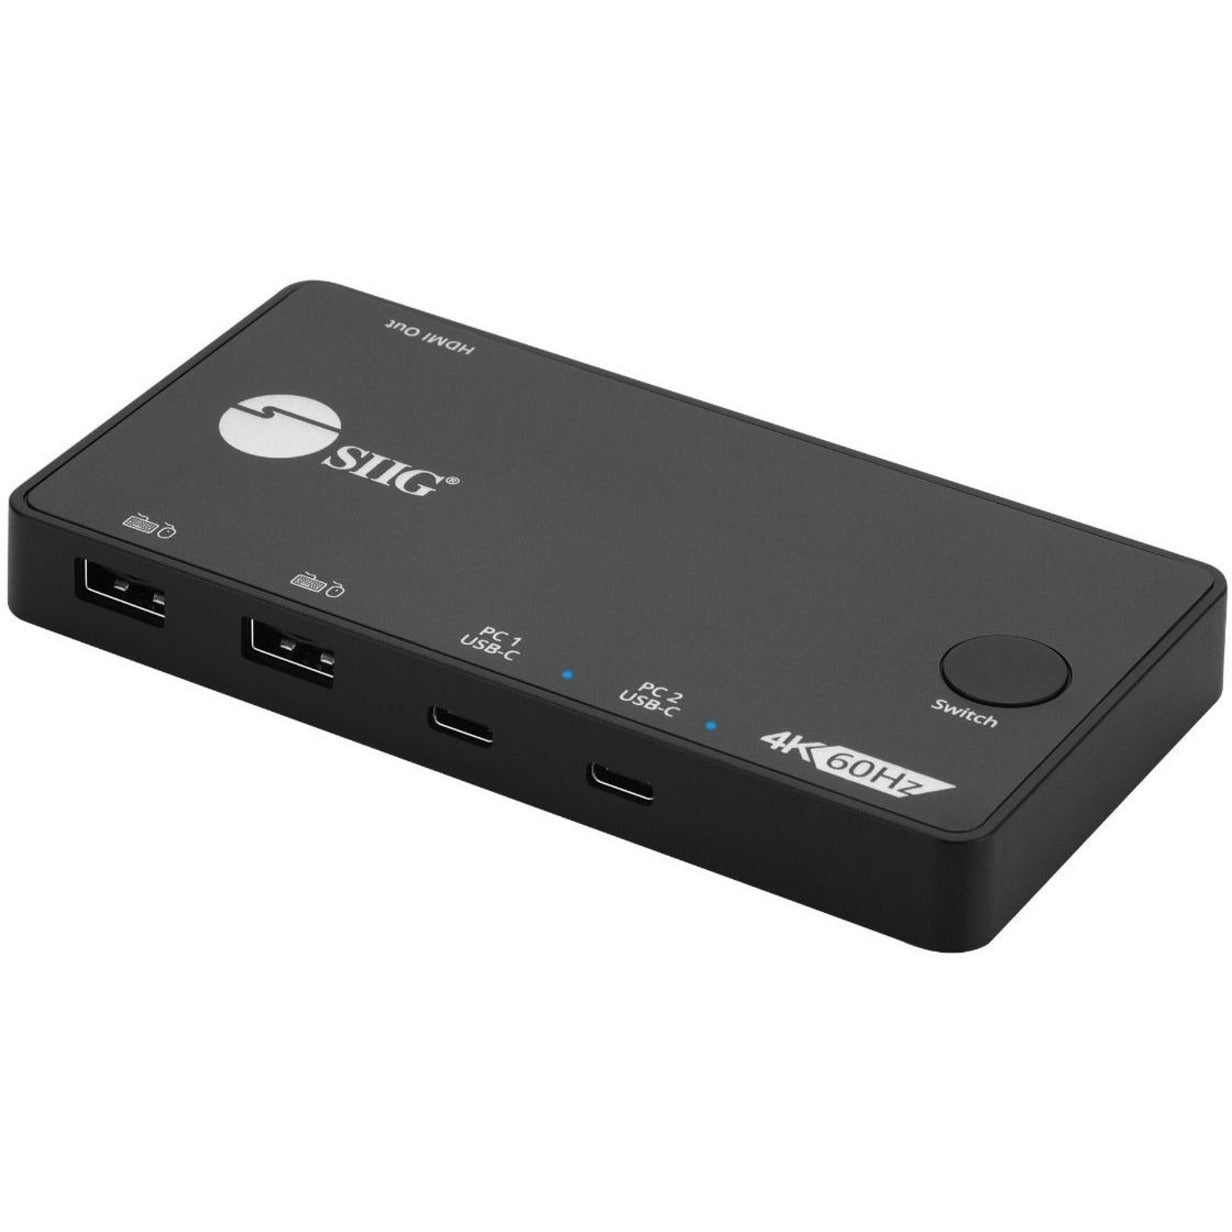 SIIG CE-KV0B11-S1 2x1 USB-C 4K Video KVM Switch Resolución 3840 x 2160 Garantía de 2 años. Marca: SIIG. Traducir SIIG al español: SIIG.